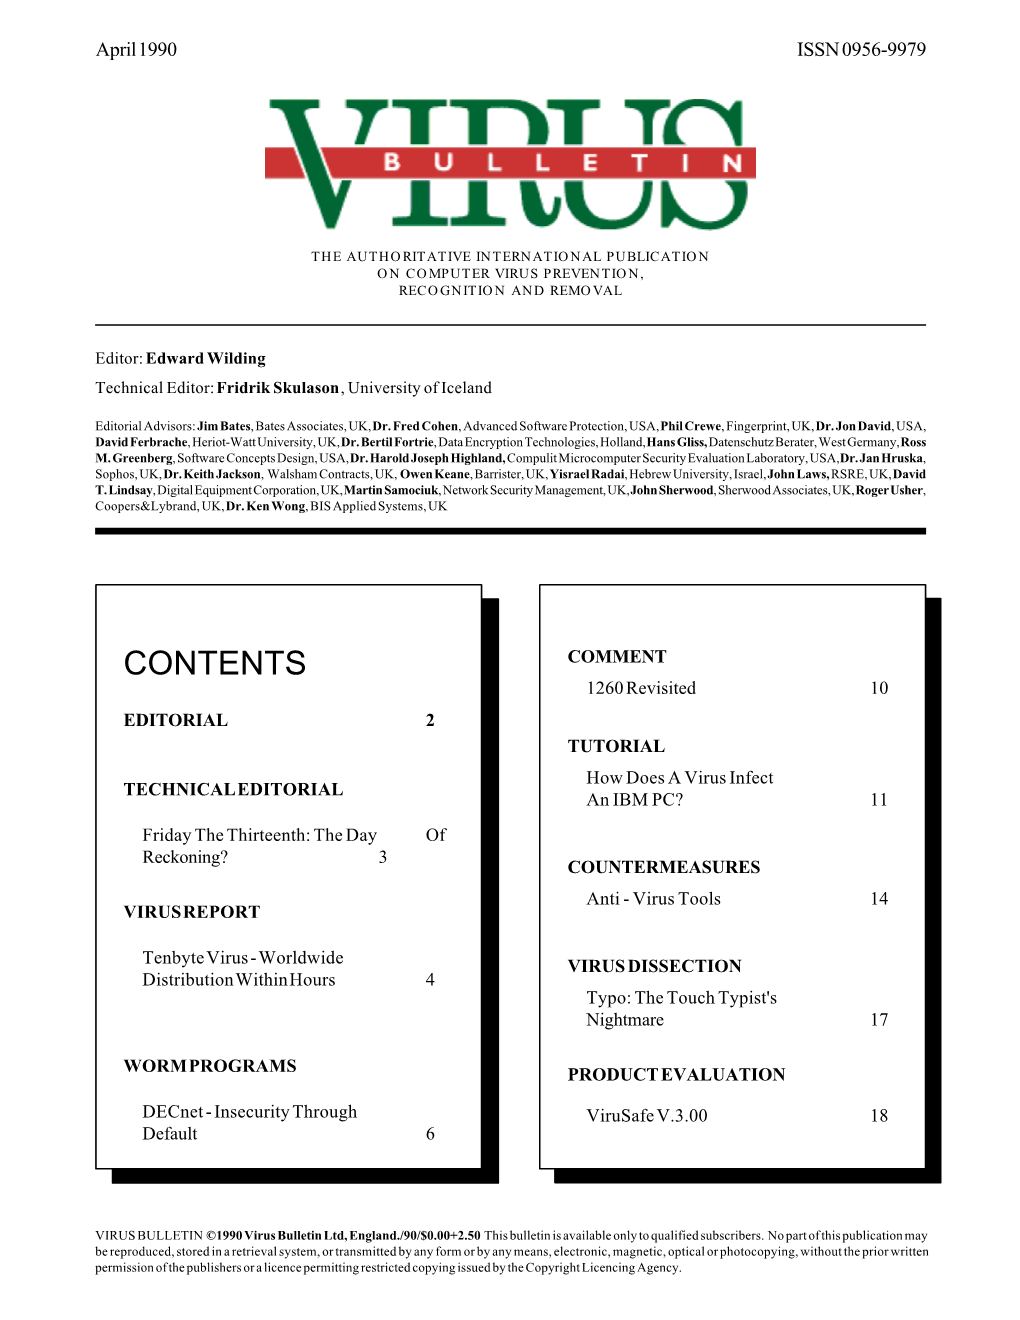 Virus Bulletin, April 1990